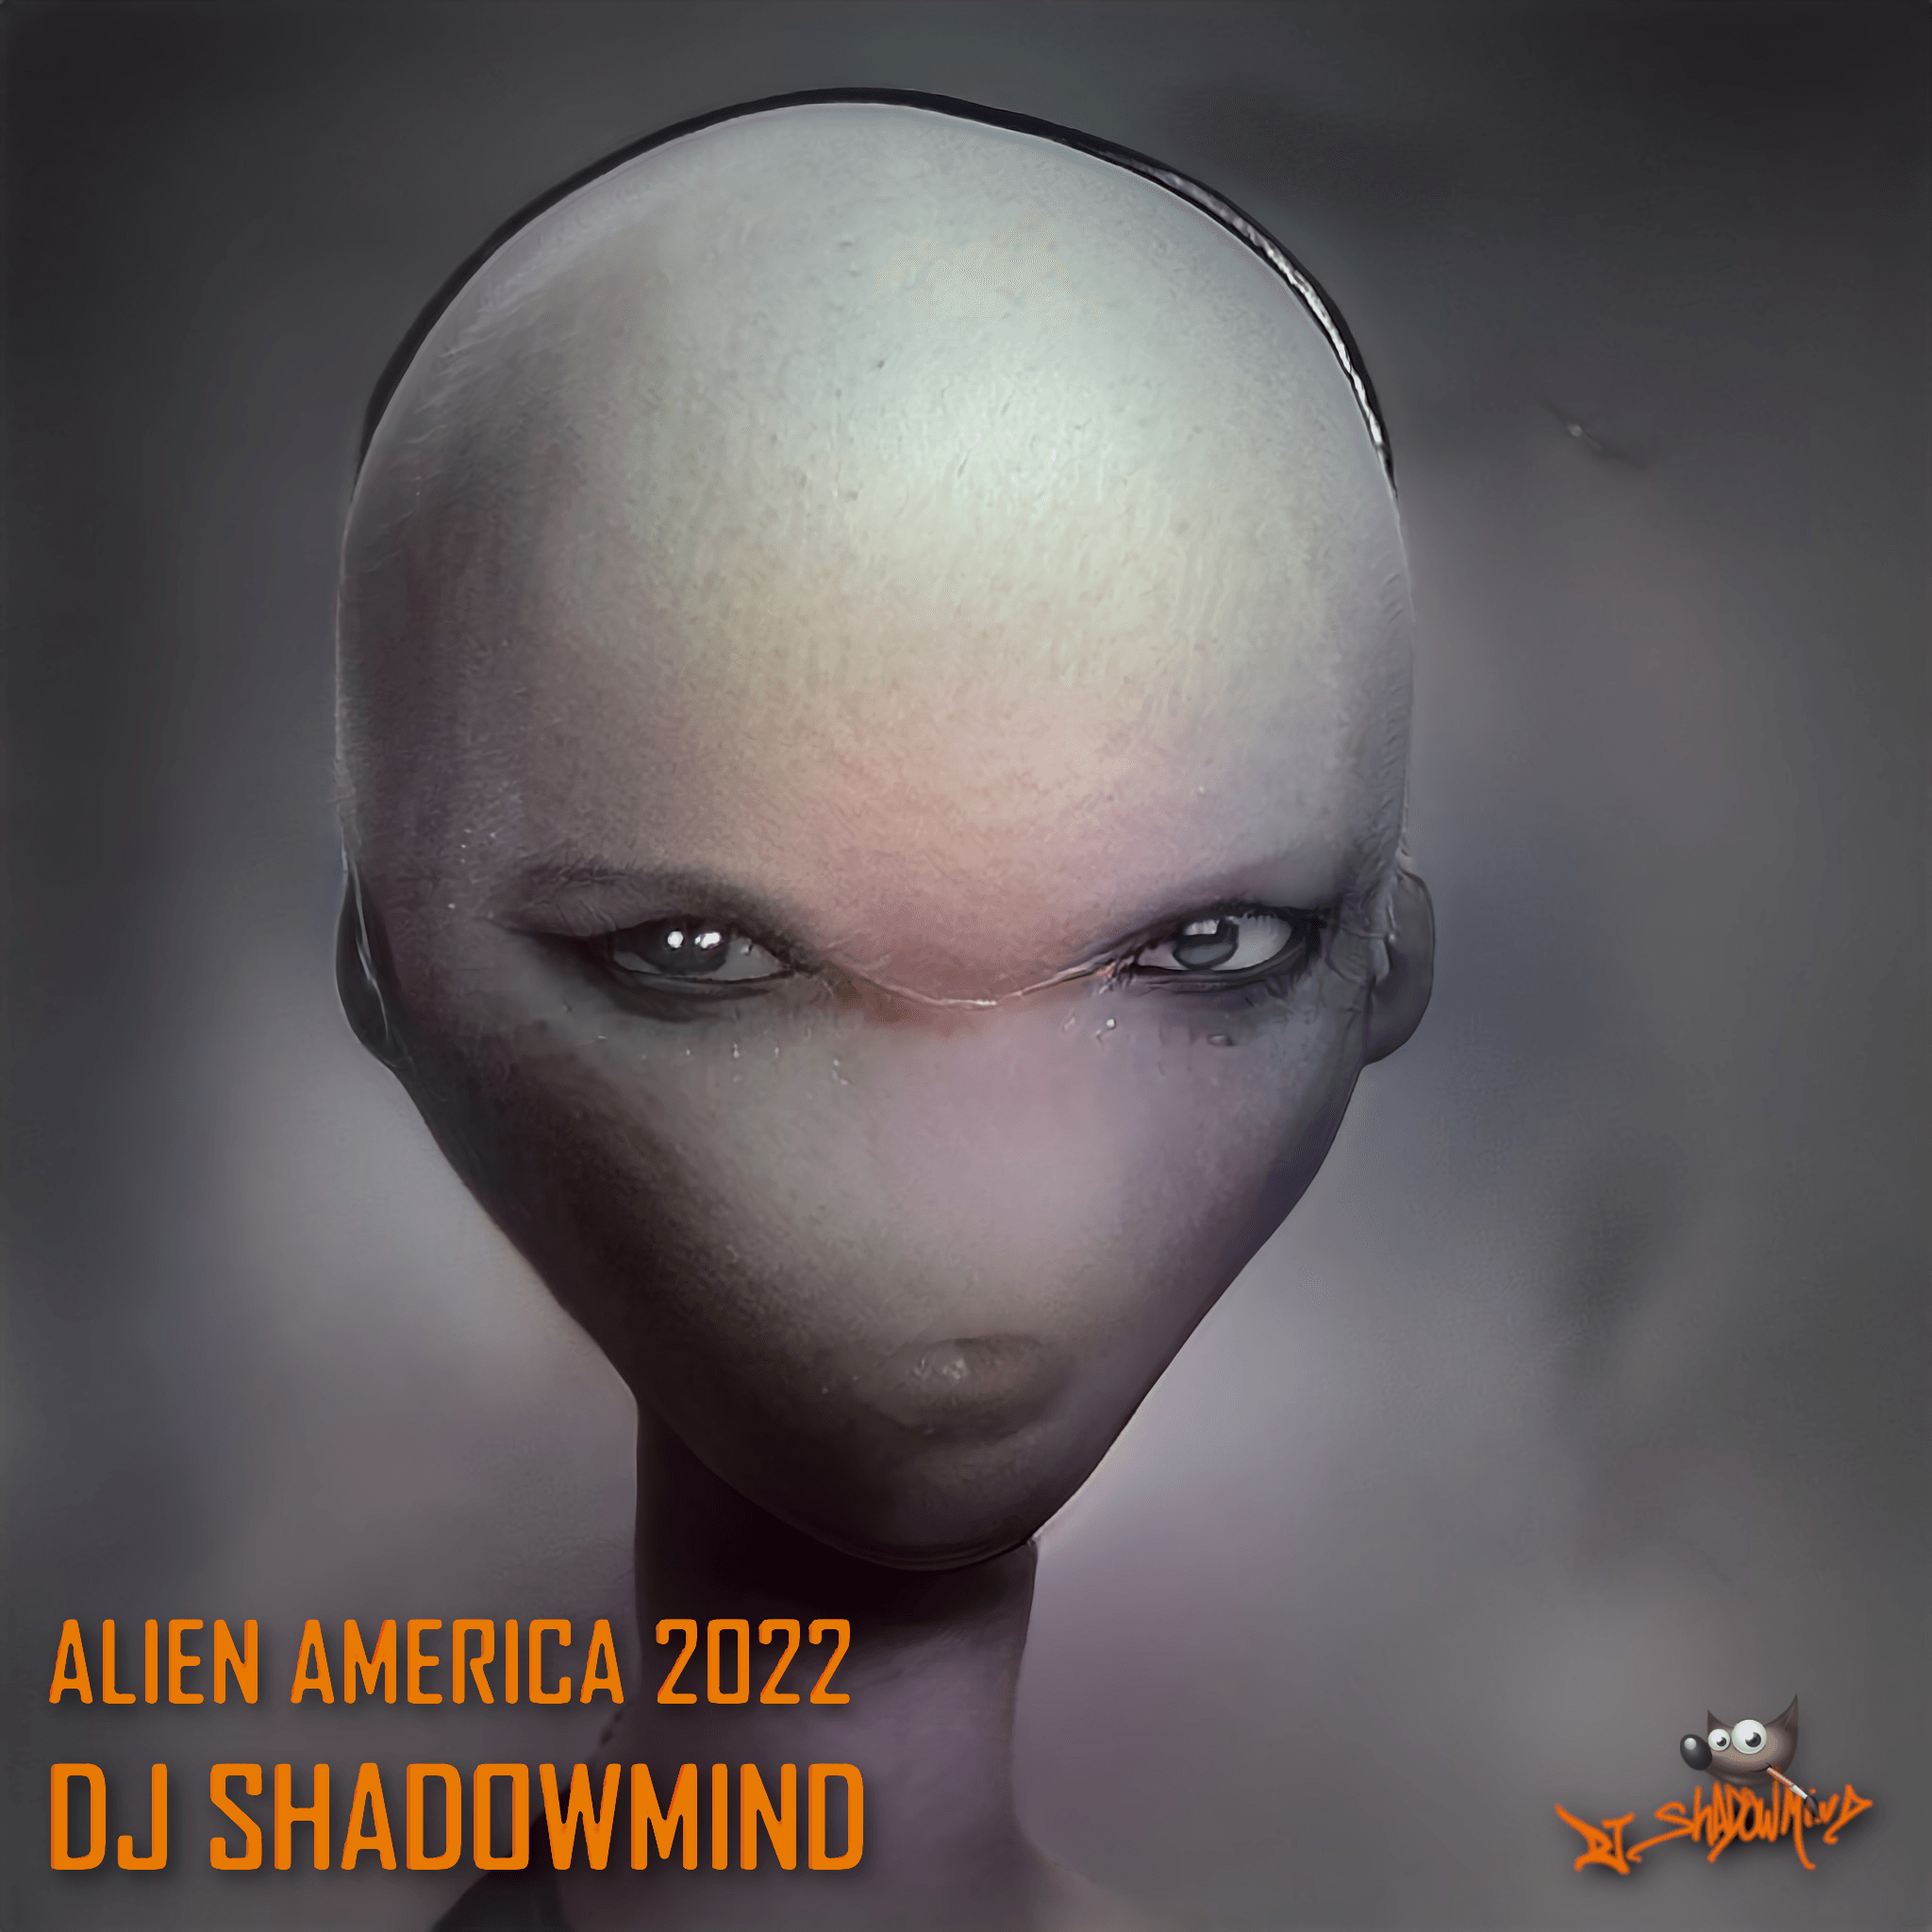 Alien America 2022 - Agent 014